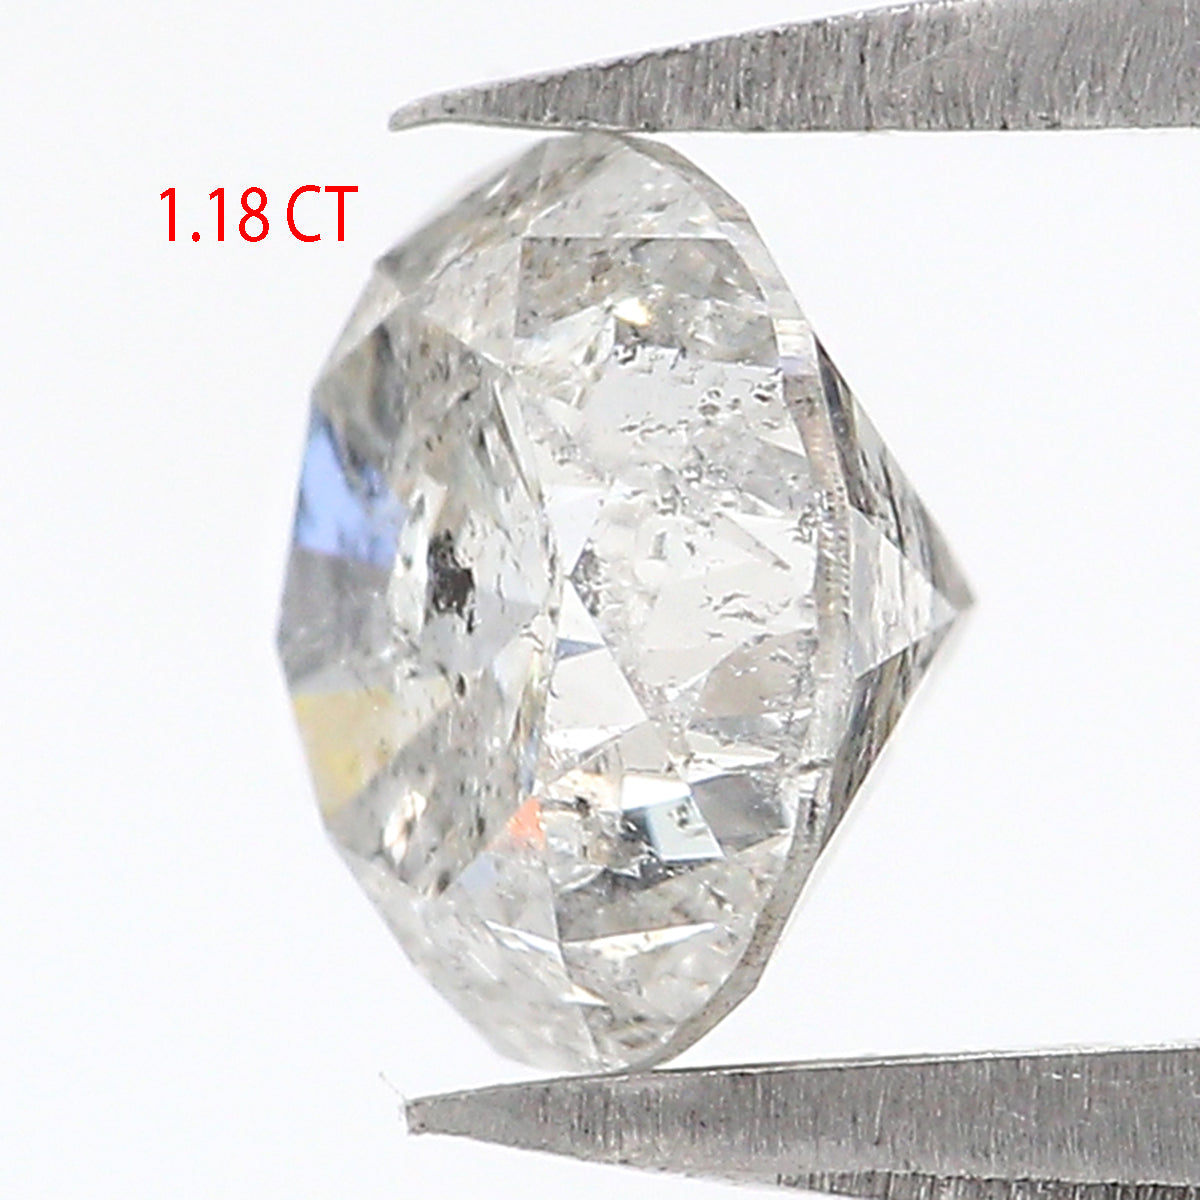 1.18 Ct Natural Loose Round Shape Diamond White - G Color Round Cut Diamond 6.35 MM Natural Loose Diamond Round Brilliant Cut Diamond QL2603